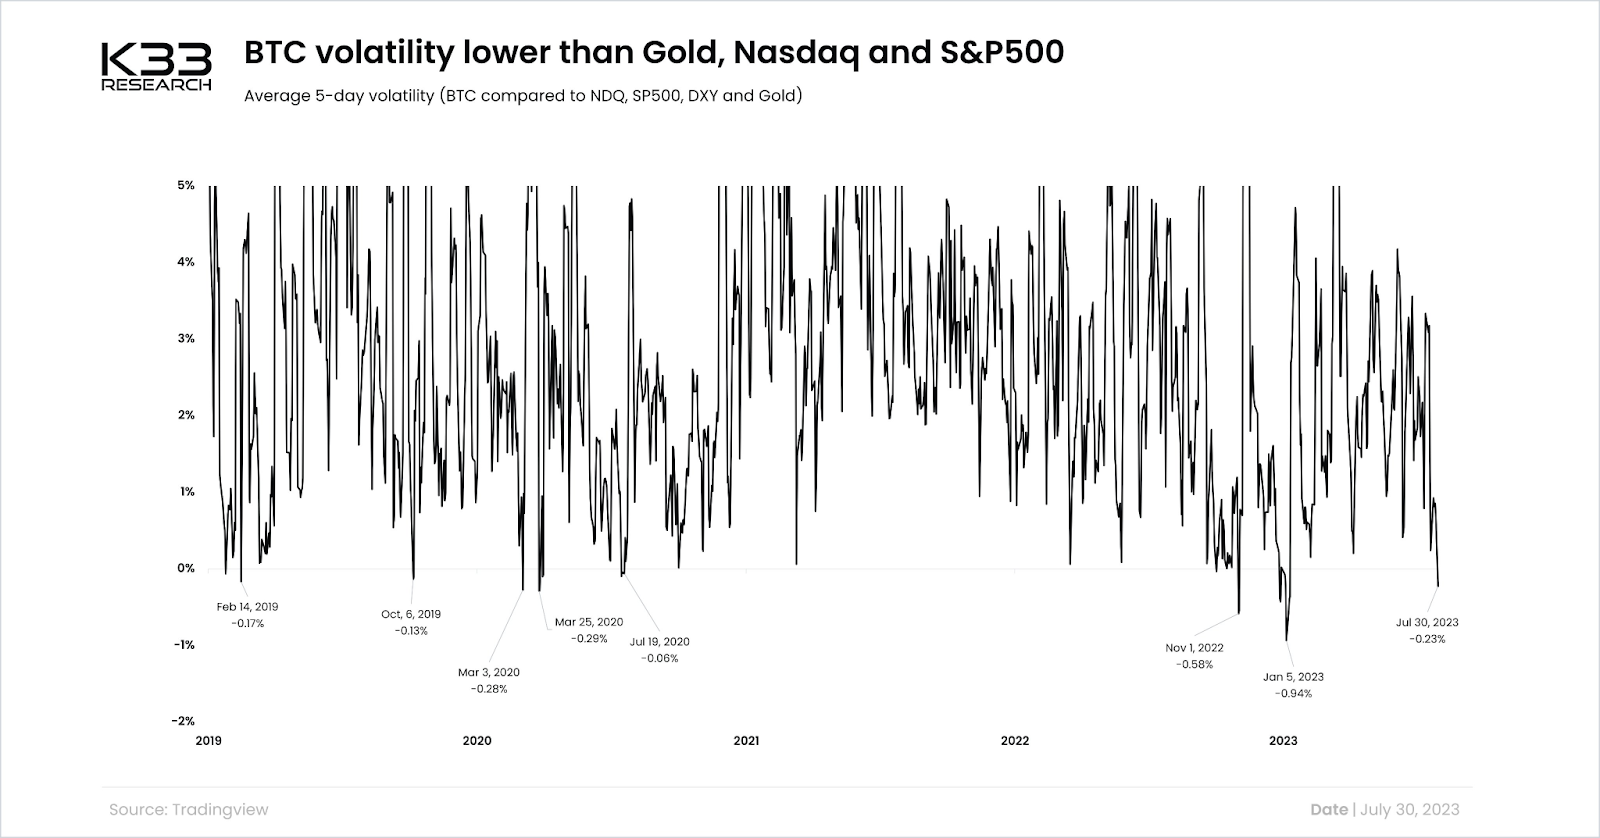 Average 5-day Bitcoin volatility compared to Nasdaq, S&P 500, and Gold